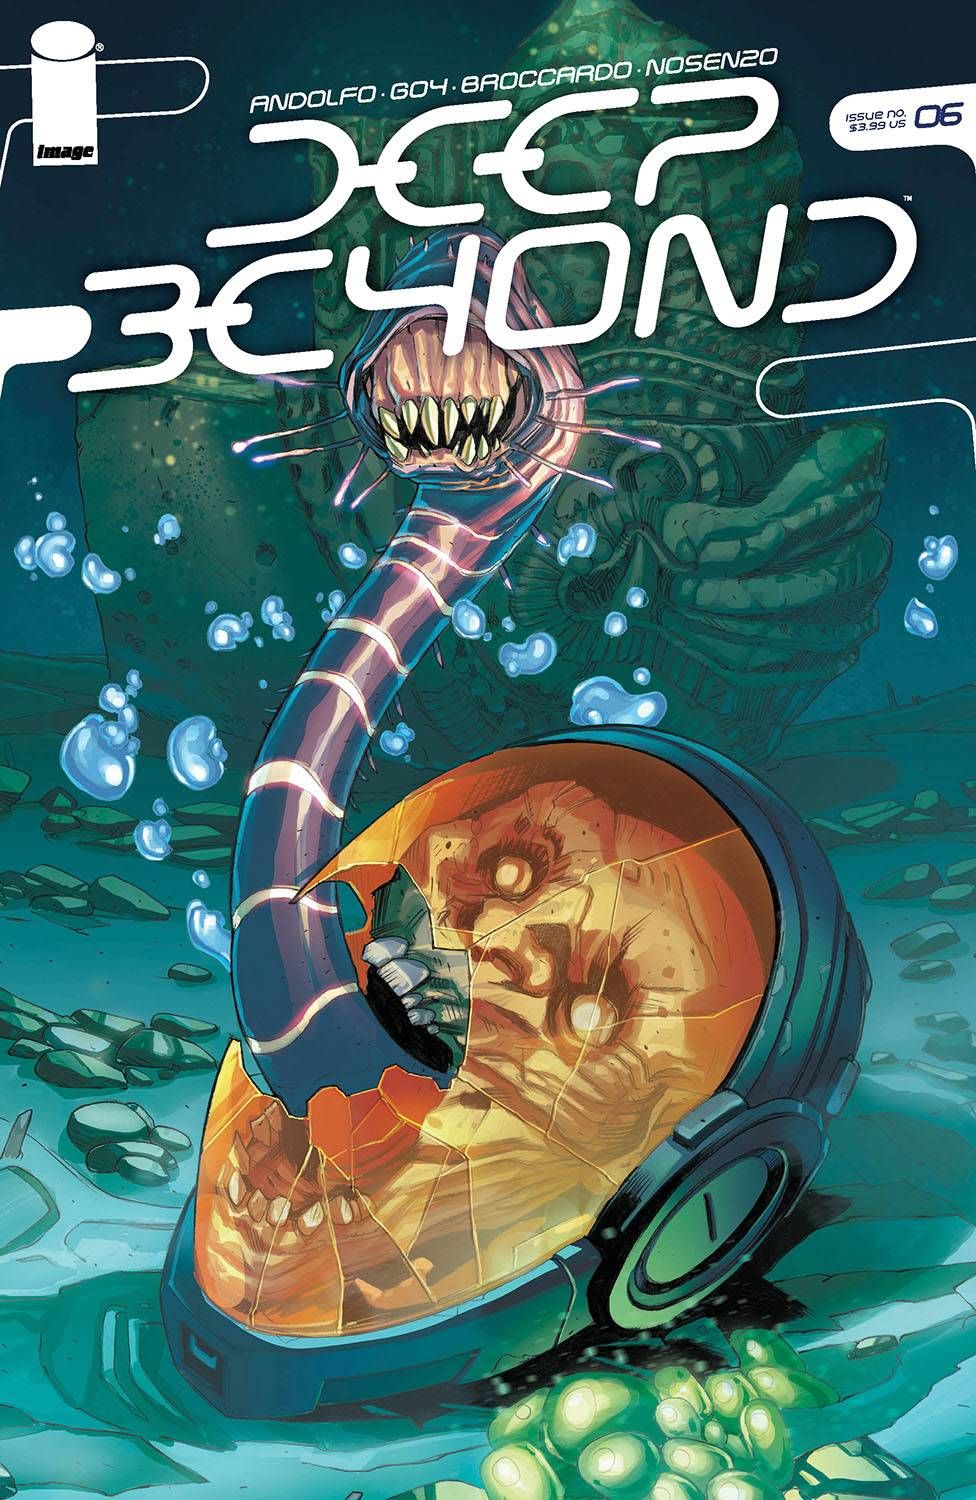 Deep Beyond #6 Comic